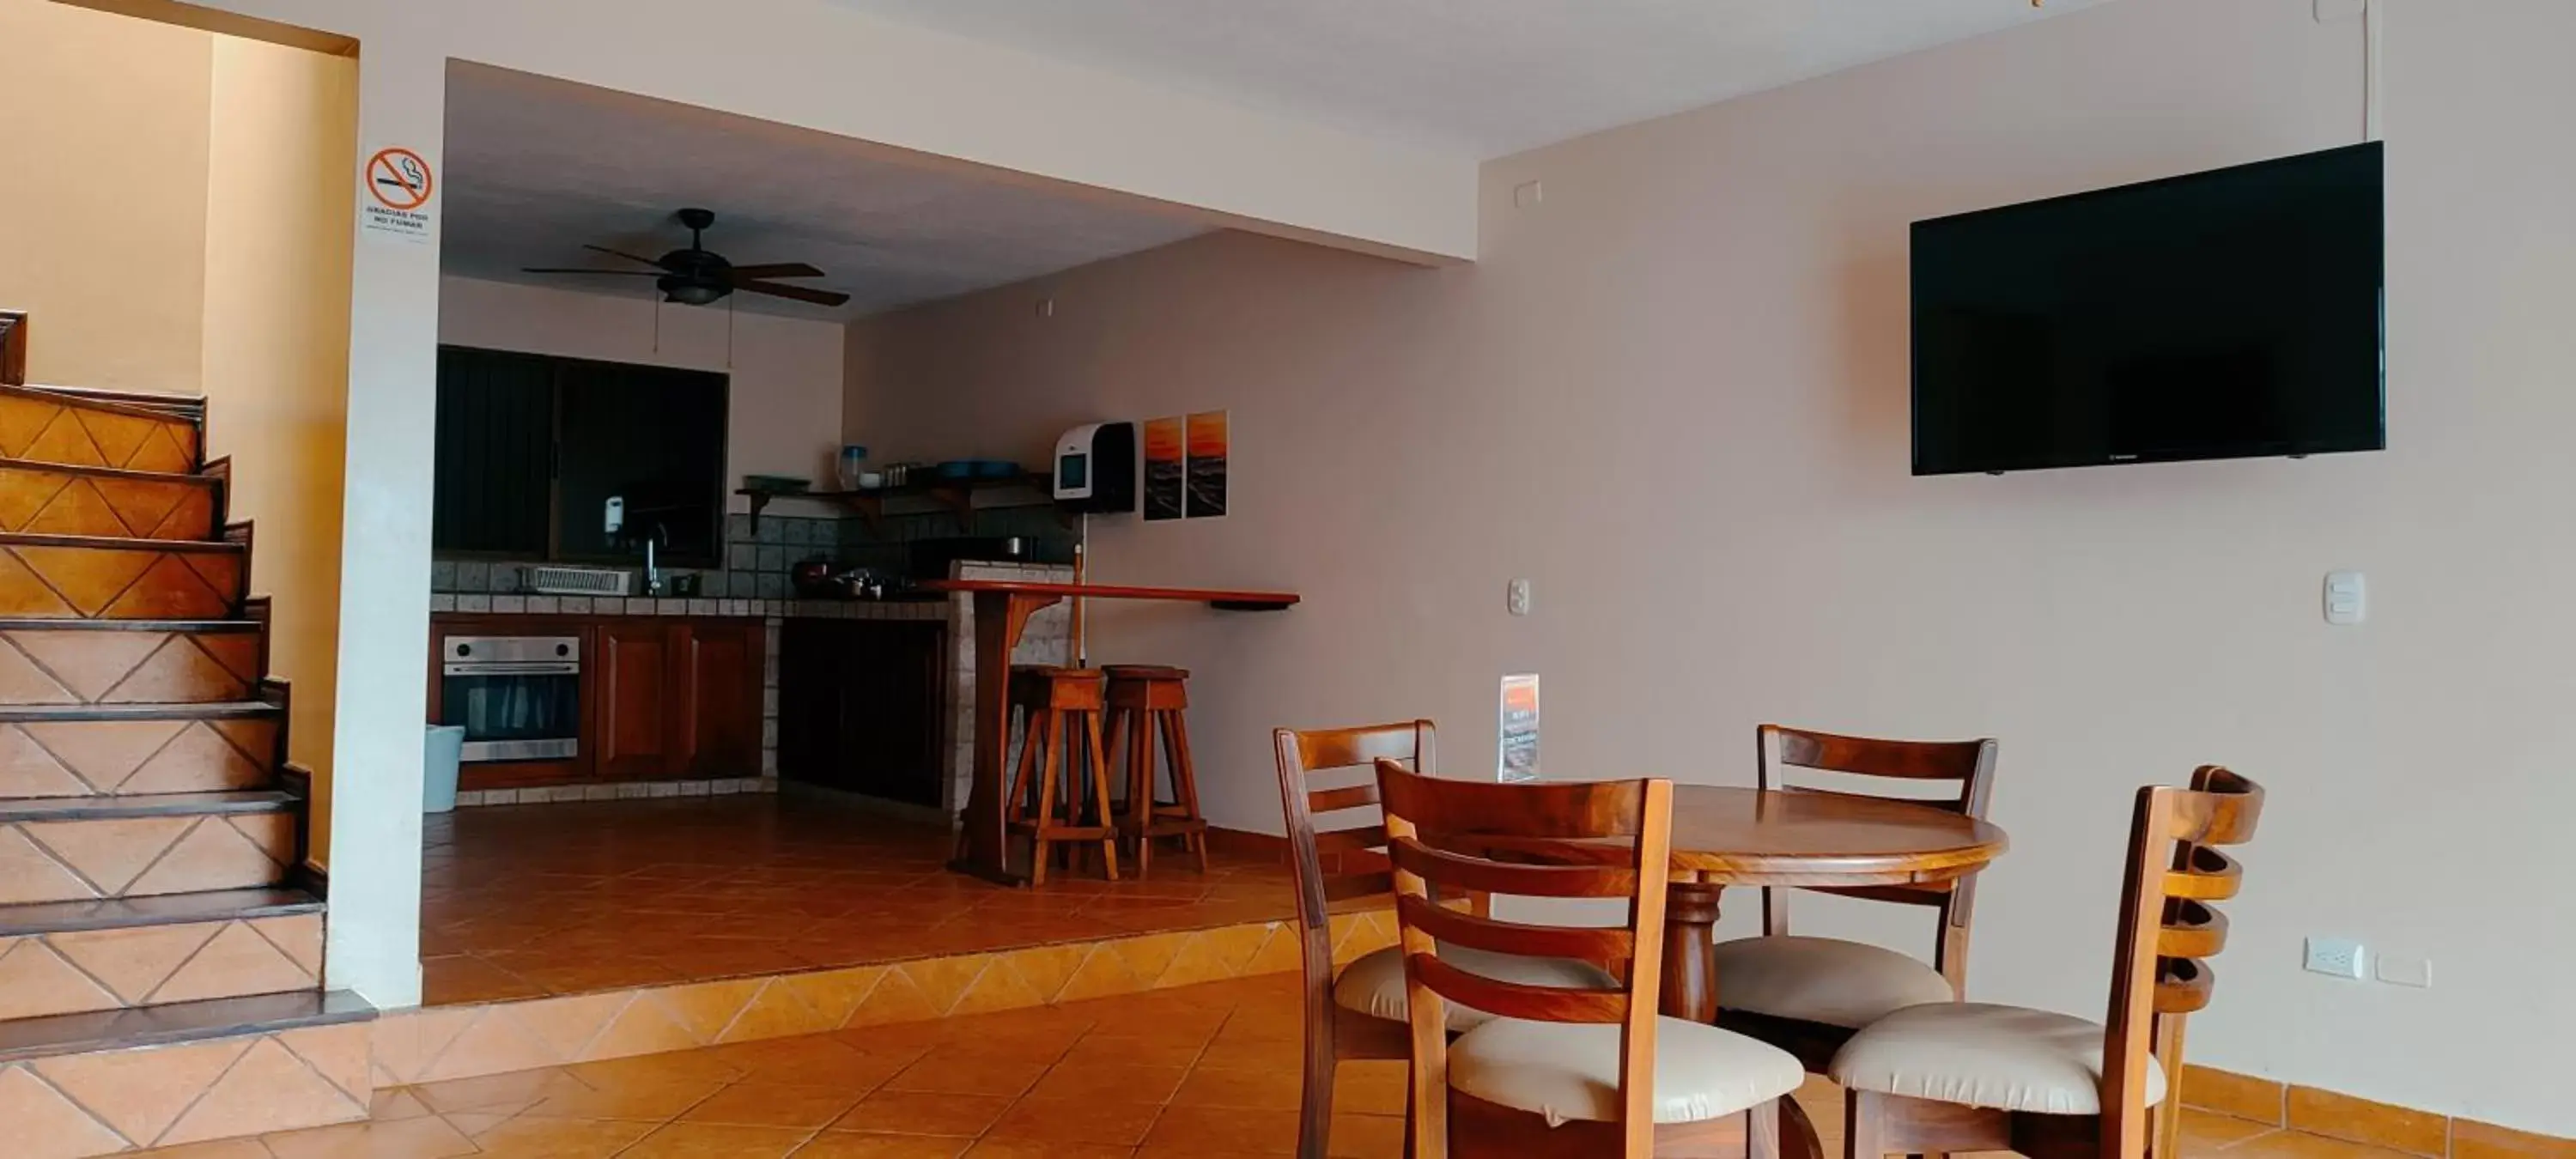 Dining Area in Apartotel VILLA ALTA TAMARINDO